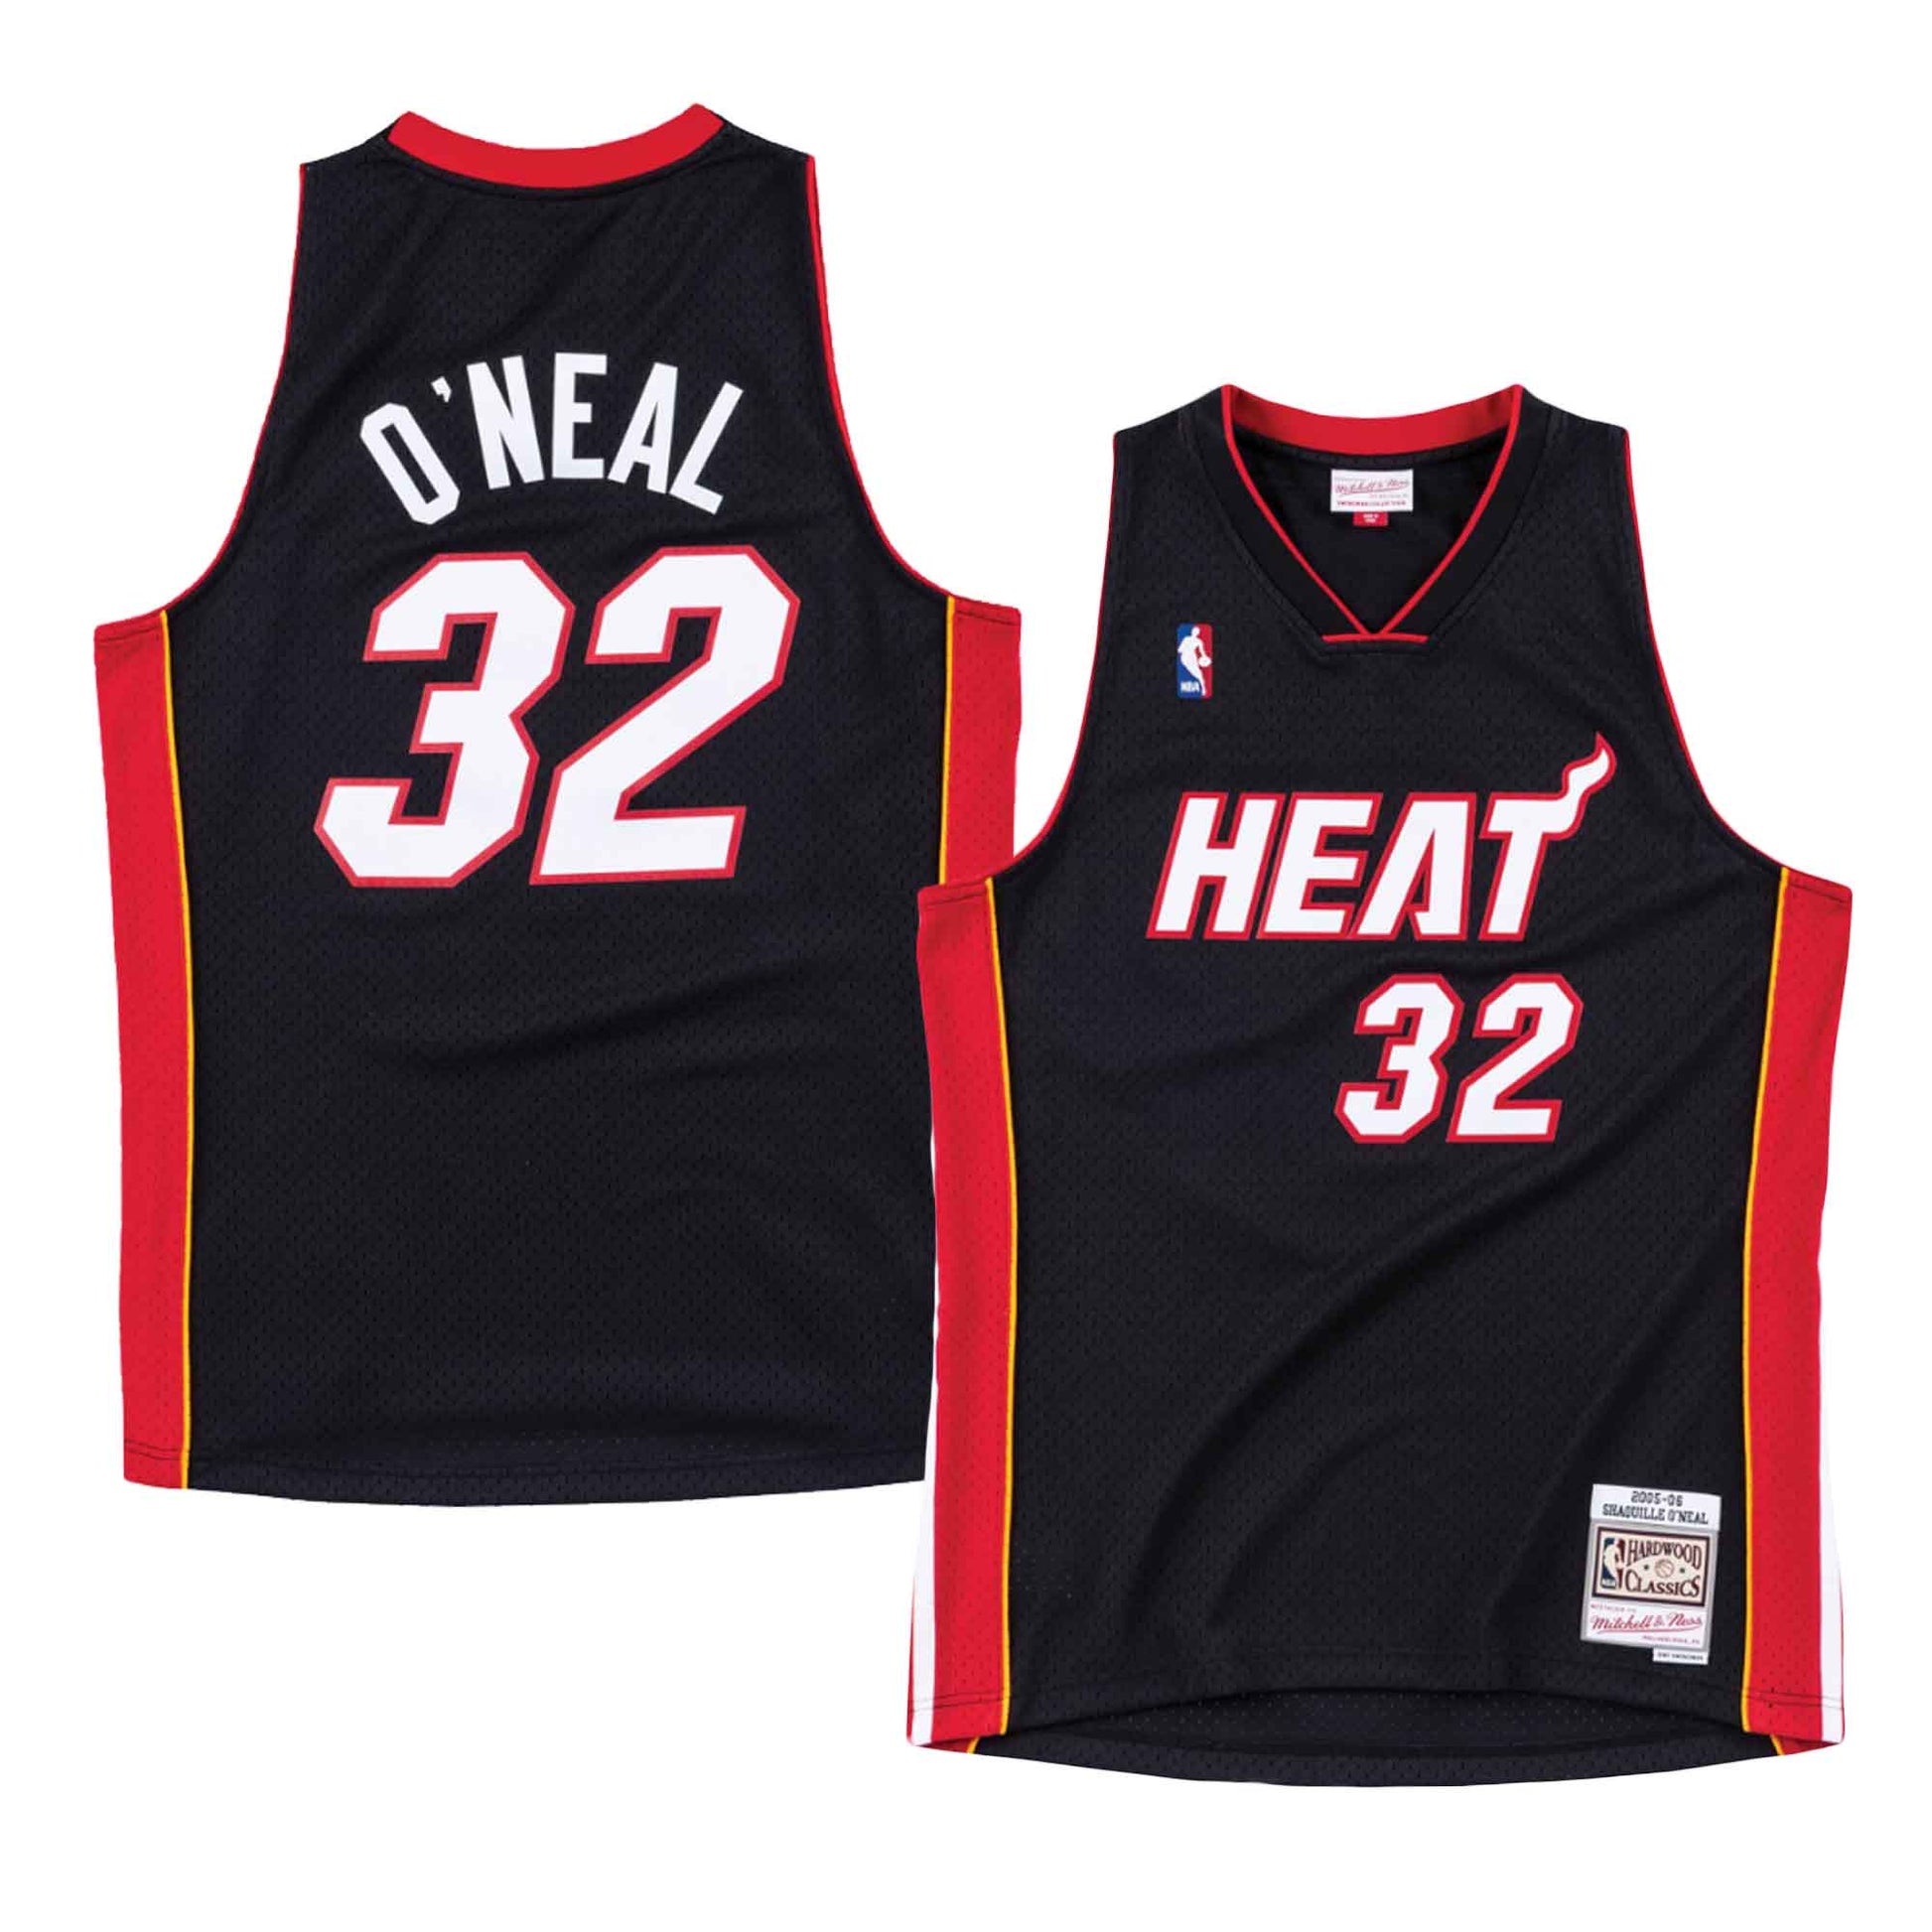 Shaquille O'Neal 32 Miami Heat 2005-06 Mitchell & Ness Swingman Jersey